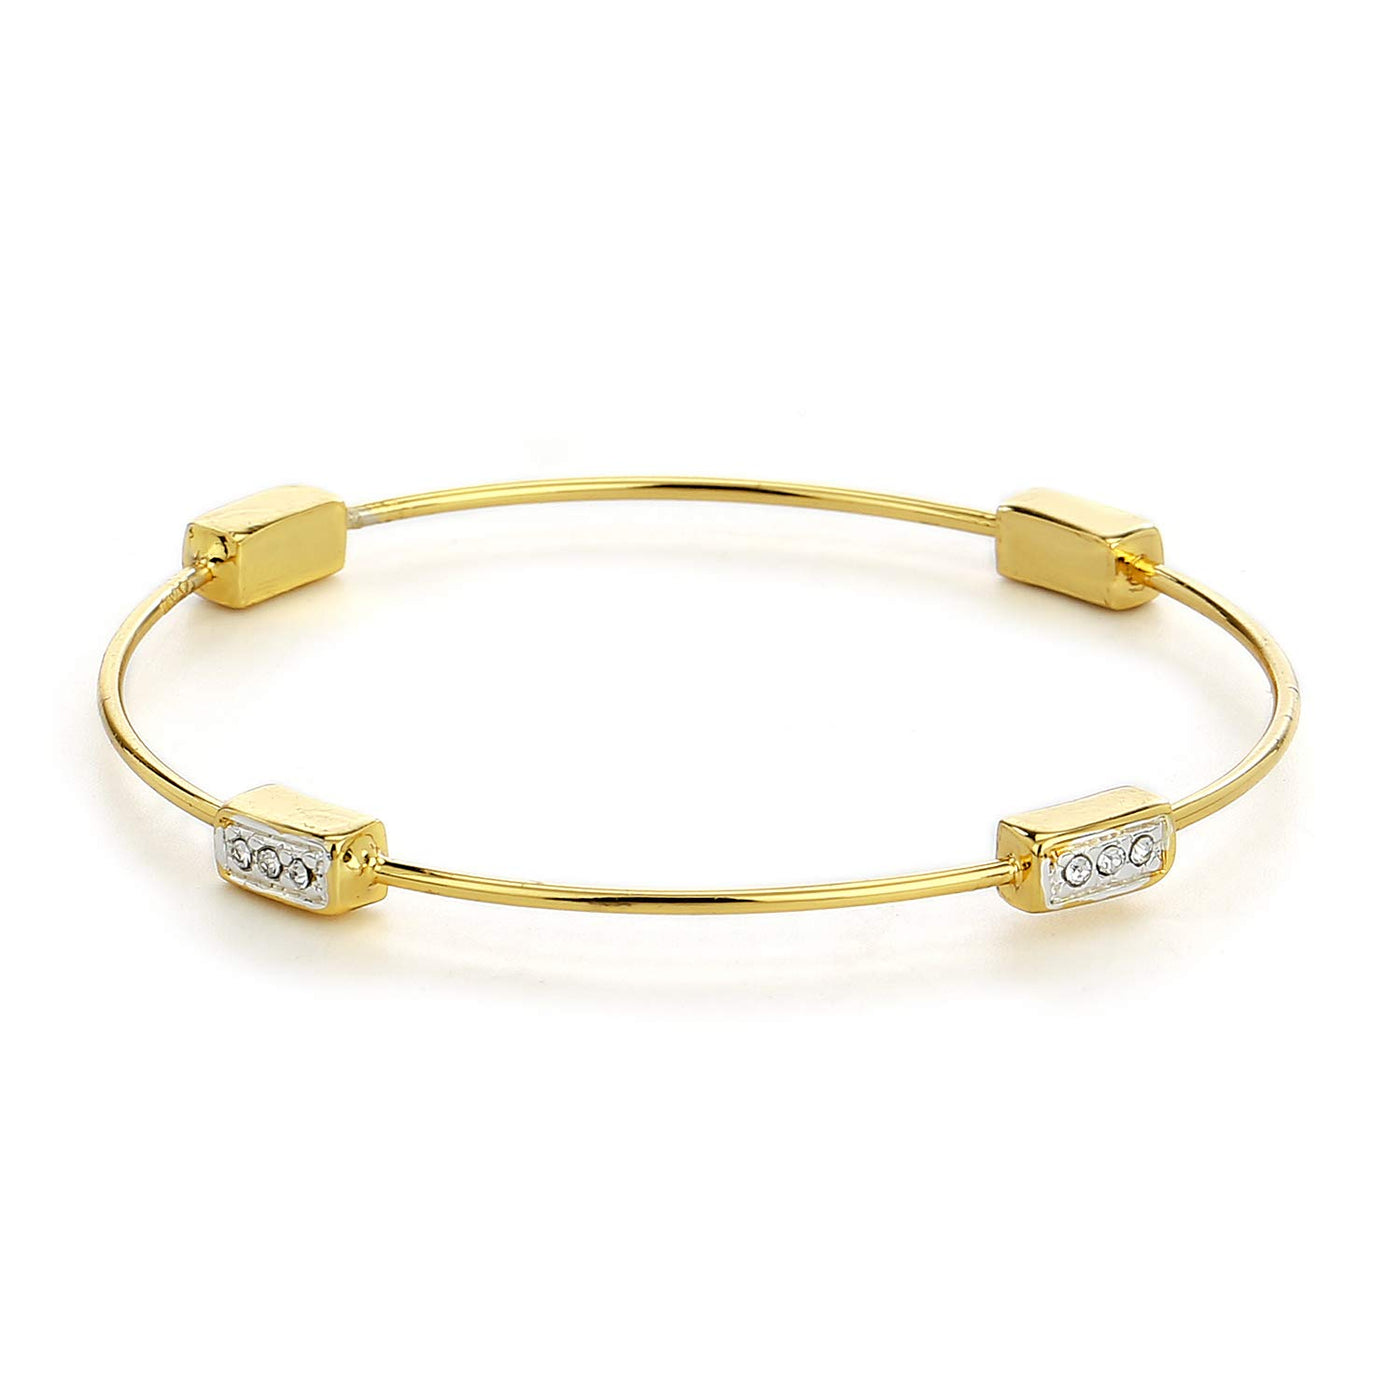 Estele Valentines Day Gift for Wife/Girl Friend Combo Set Necklace Earrings Bracelet & Ring for Girls & Women